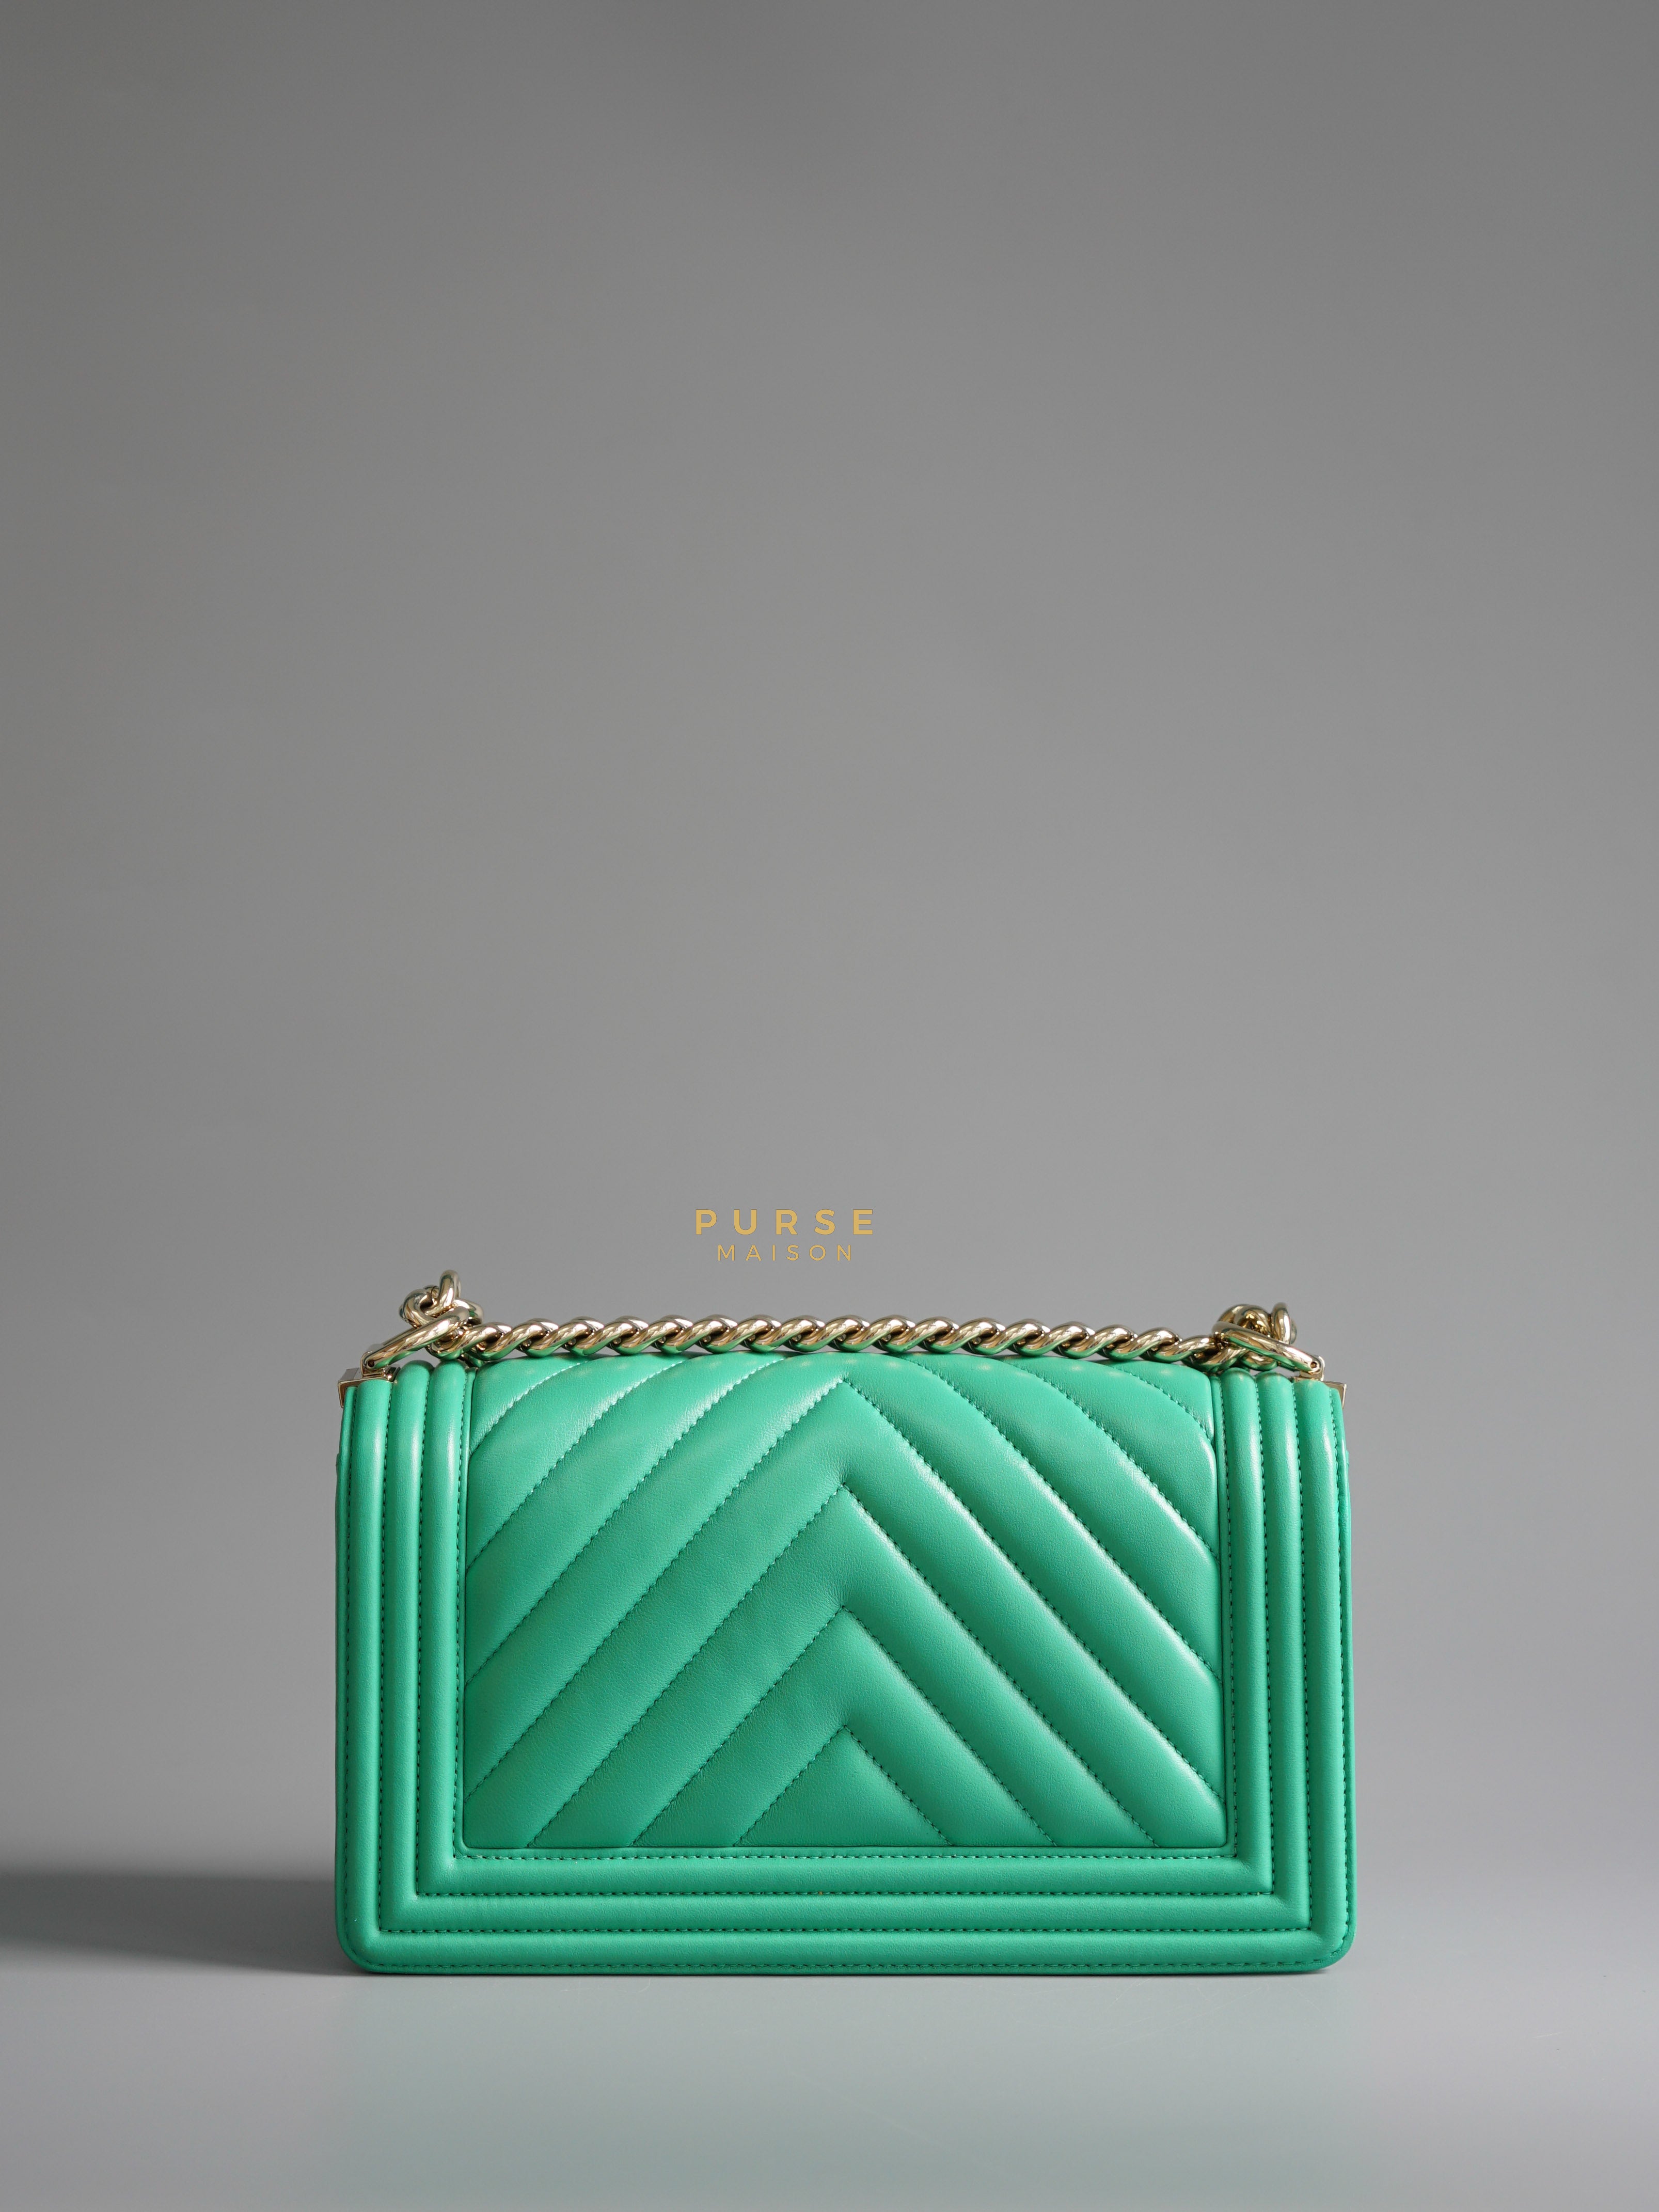 Chanel Boy Medium in Mint Green Chevron Lambskin Leather and Light Gold Hardware Series 23 | Purse Maison Luxury Bags Shop